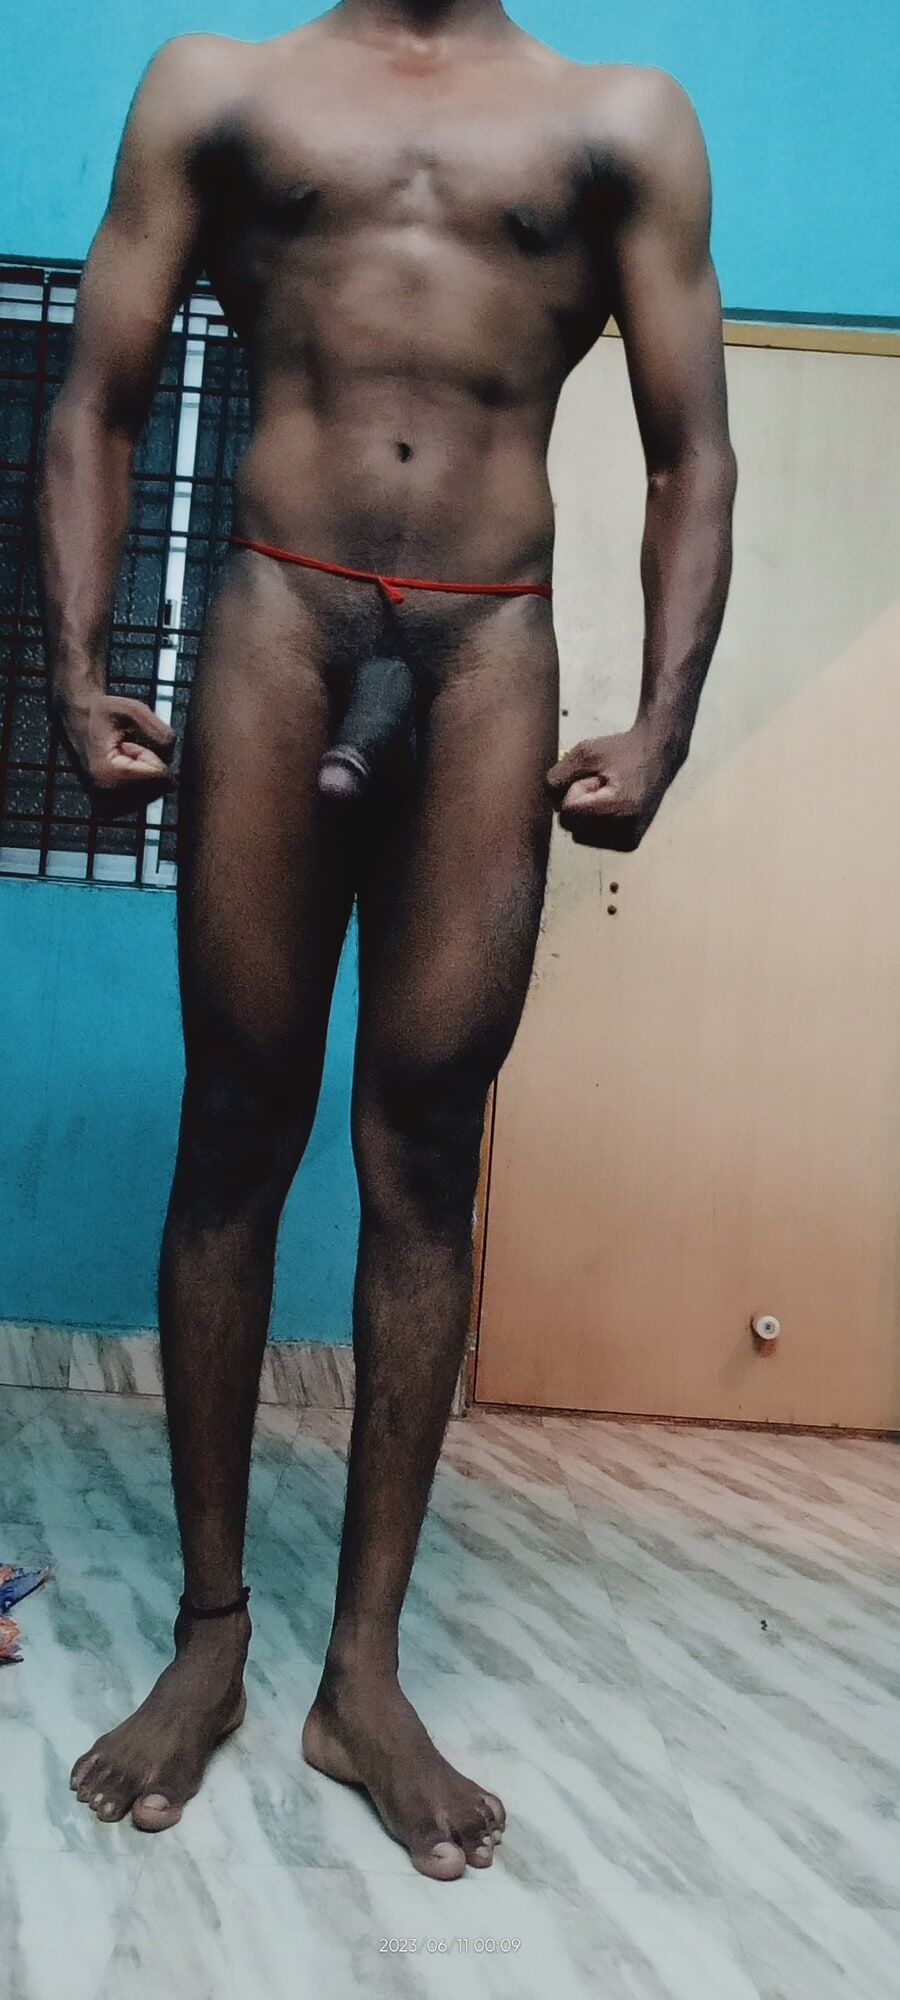 Tamil boy naked body show big black dick show